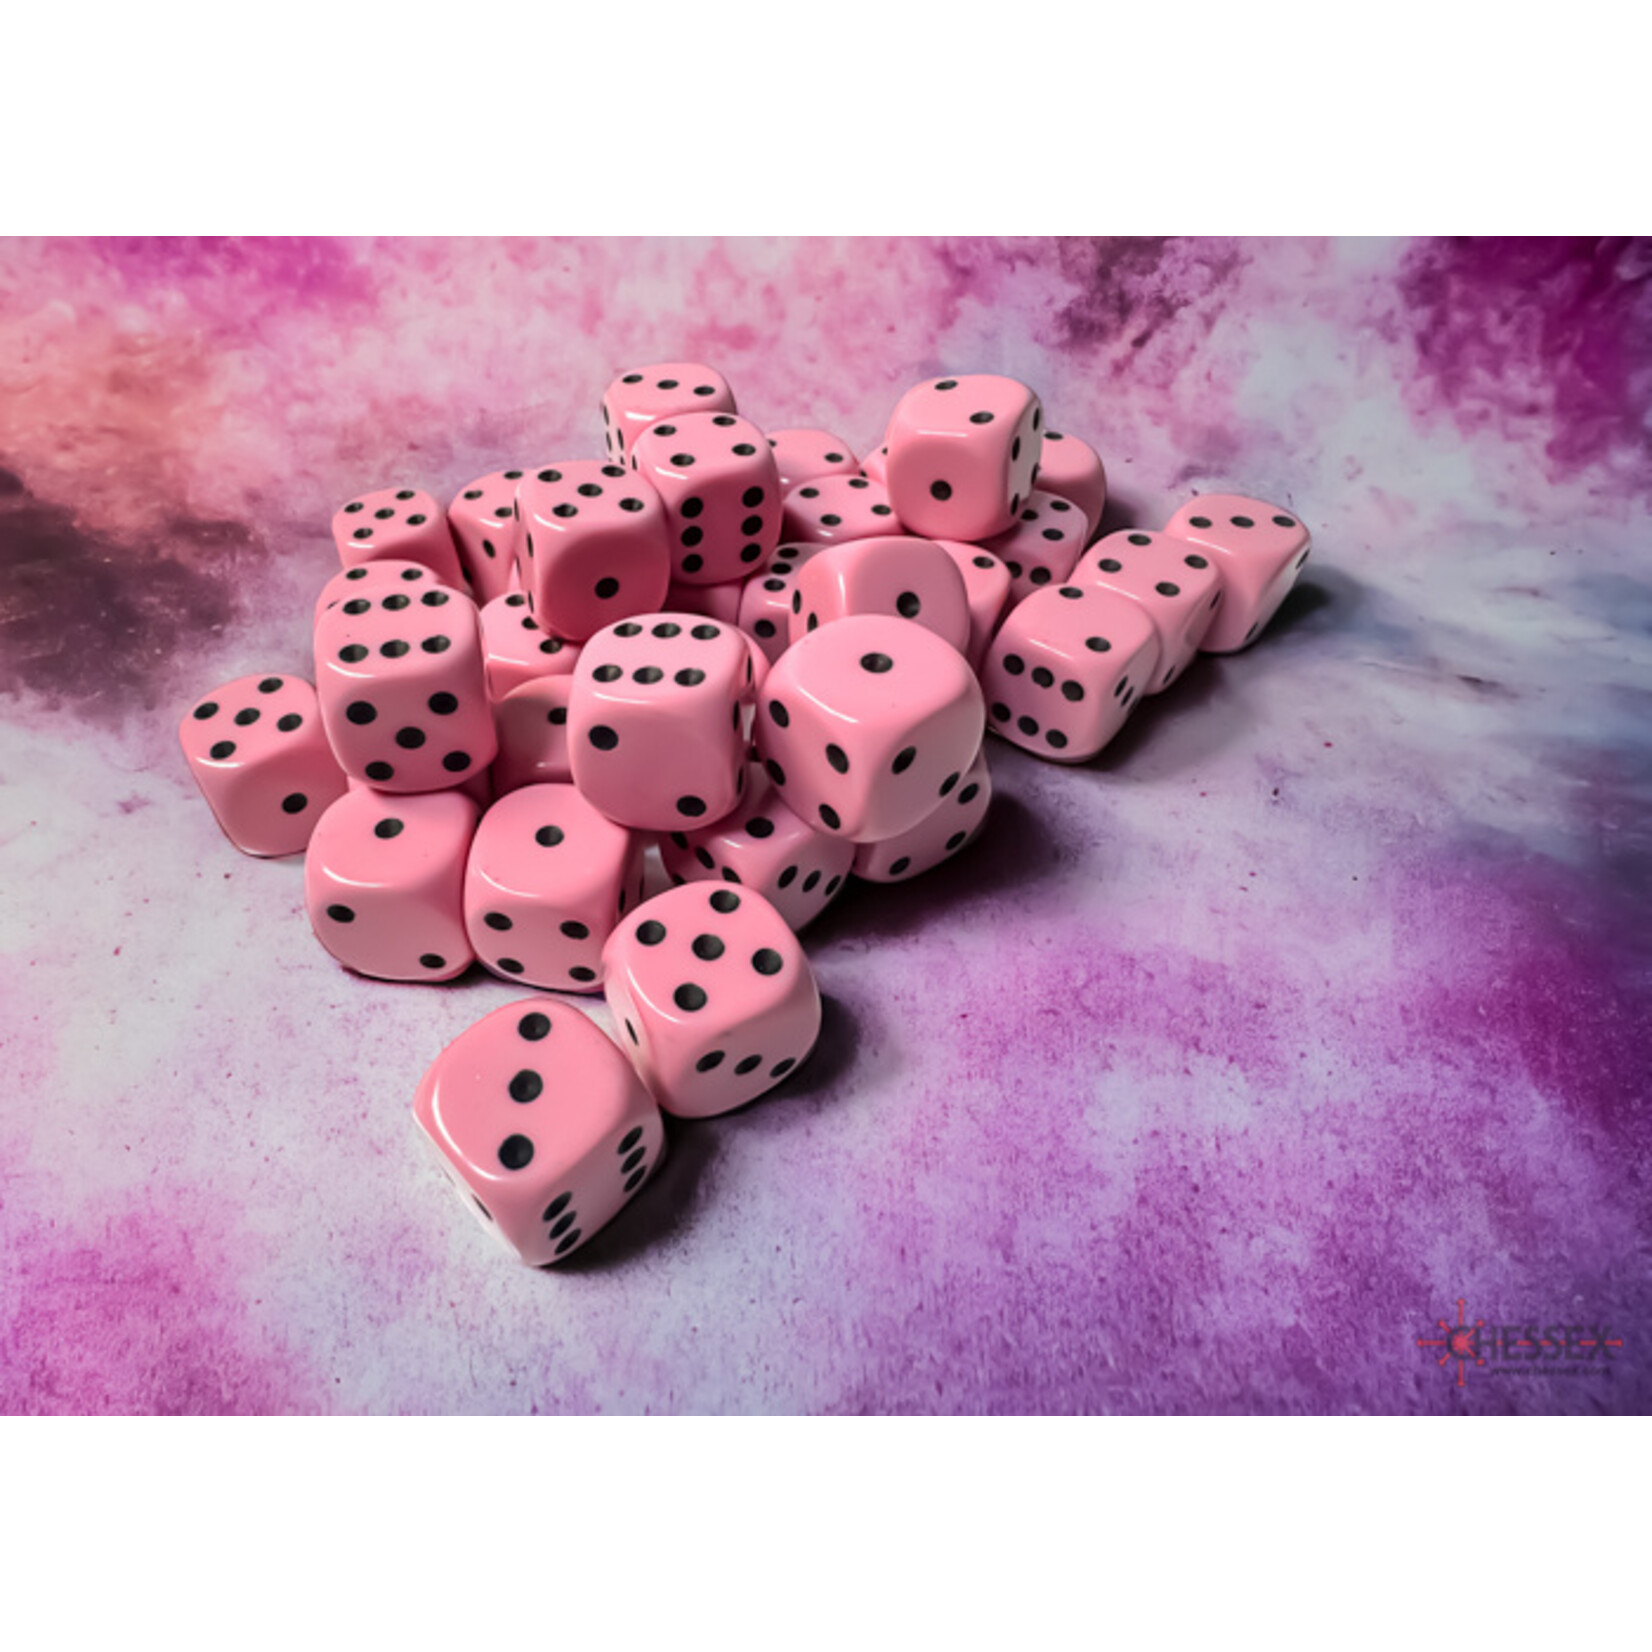 Chessex Chessex 36 x D6 Set Opaque Pastel 12mm - Pink/Black